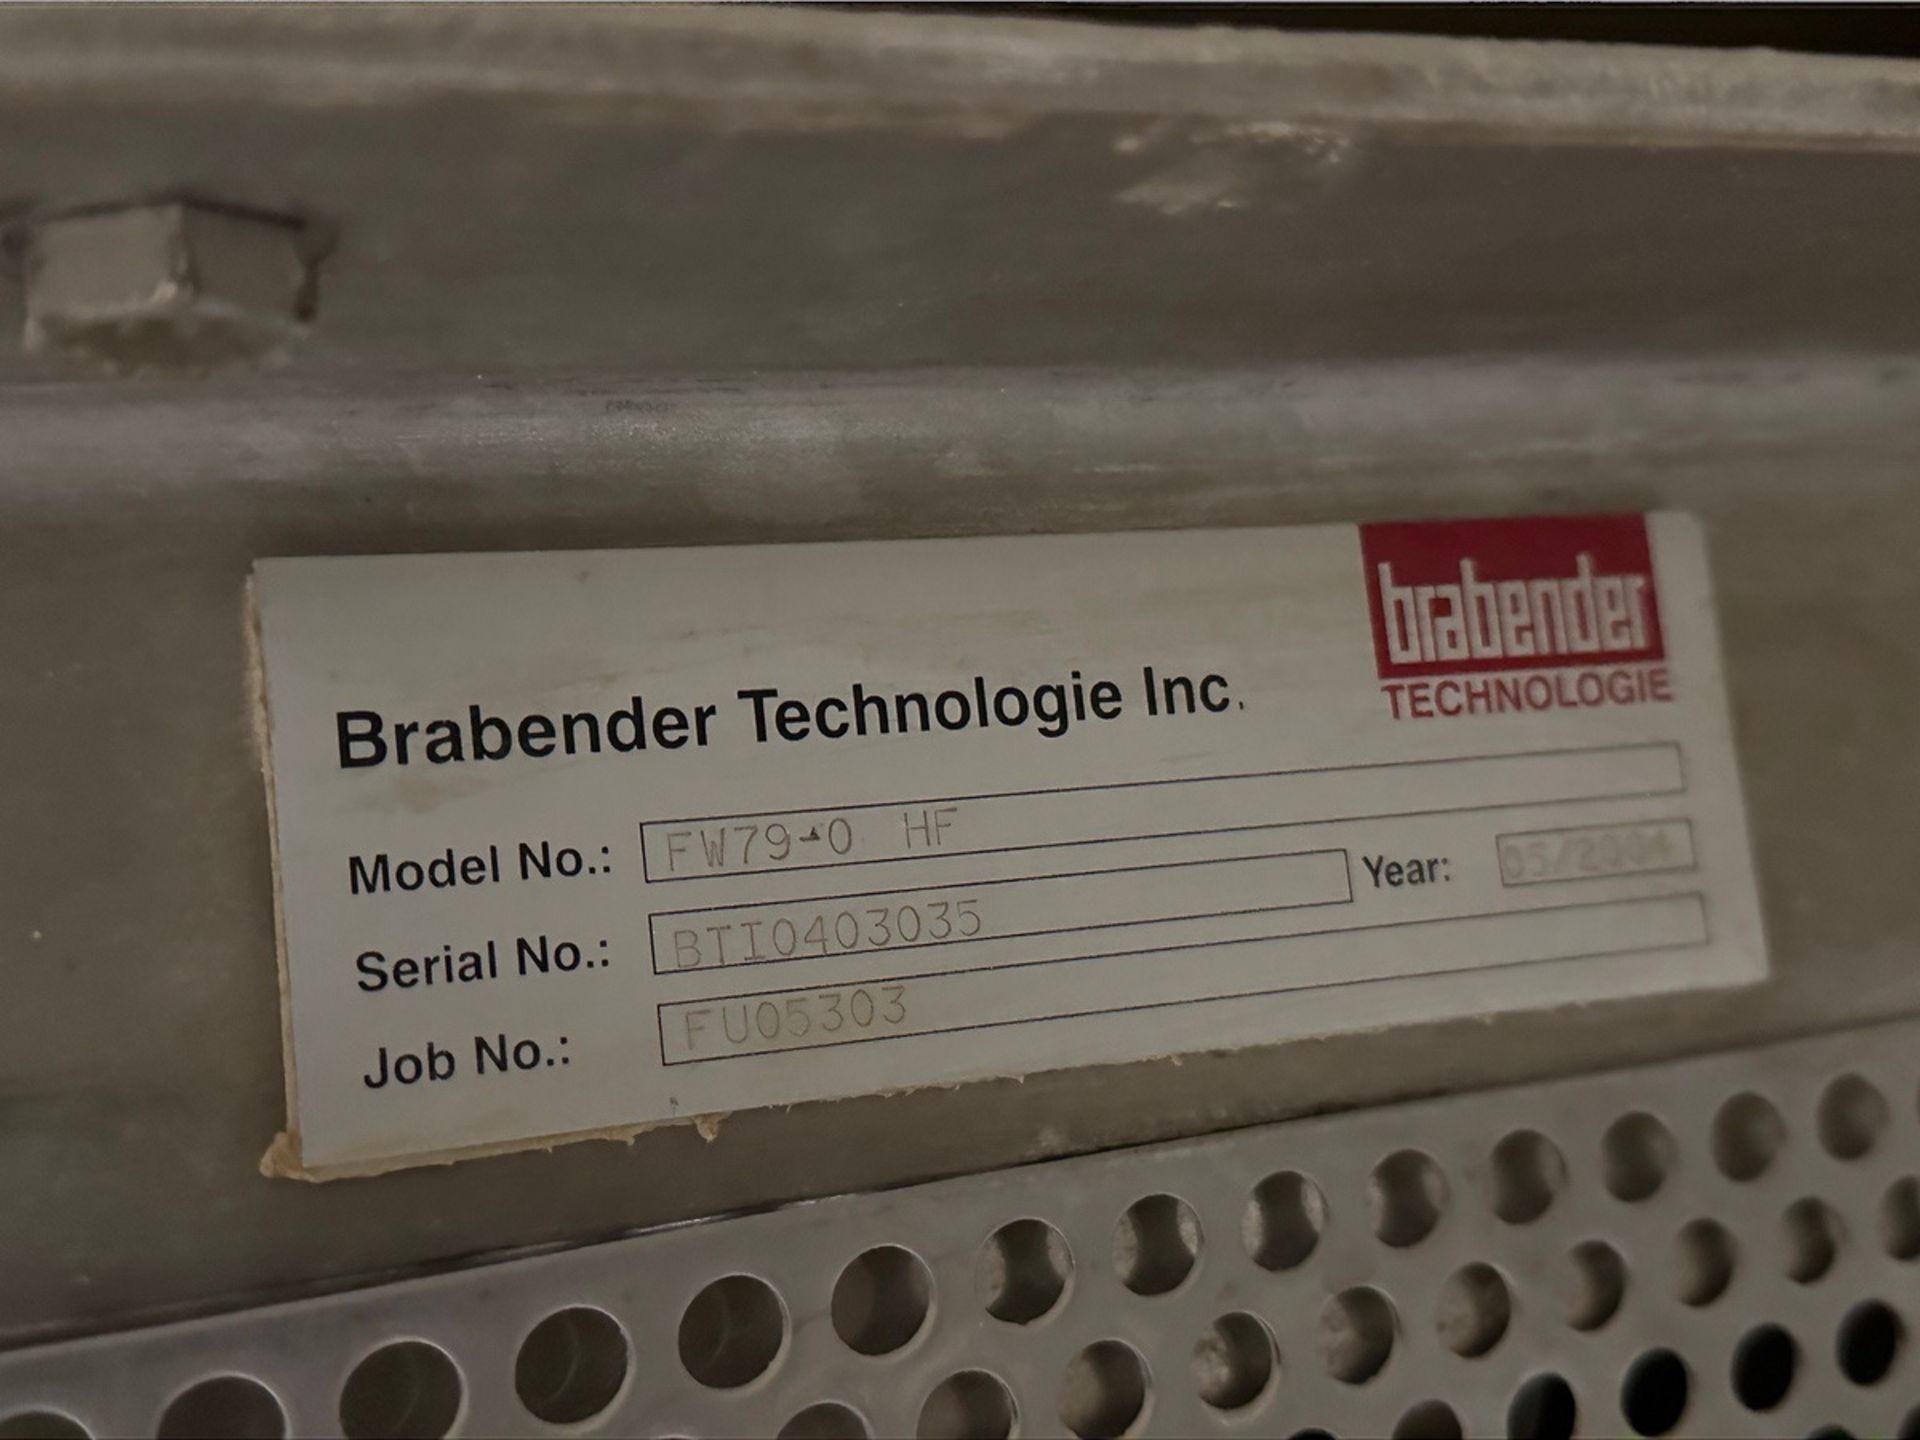 Brabender Stainless Steel Ingredient Hopper - Model FW79-0 HF, S/N BT - Subj to Bulk | Rig Fee $1000 - Image 5 of 5